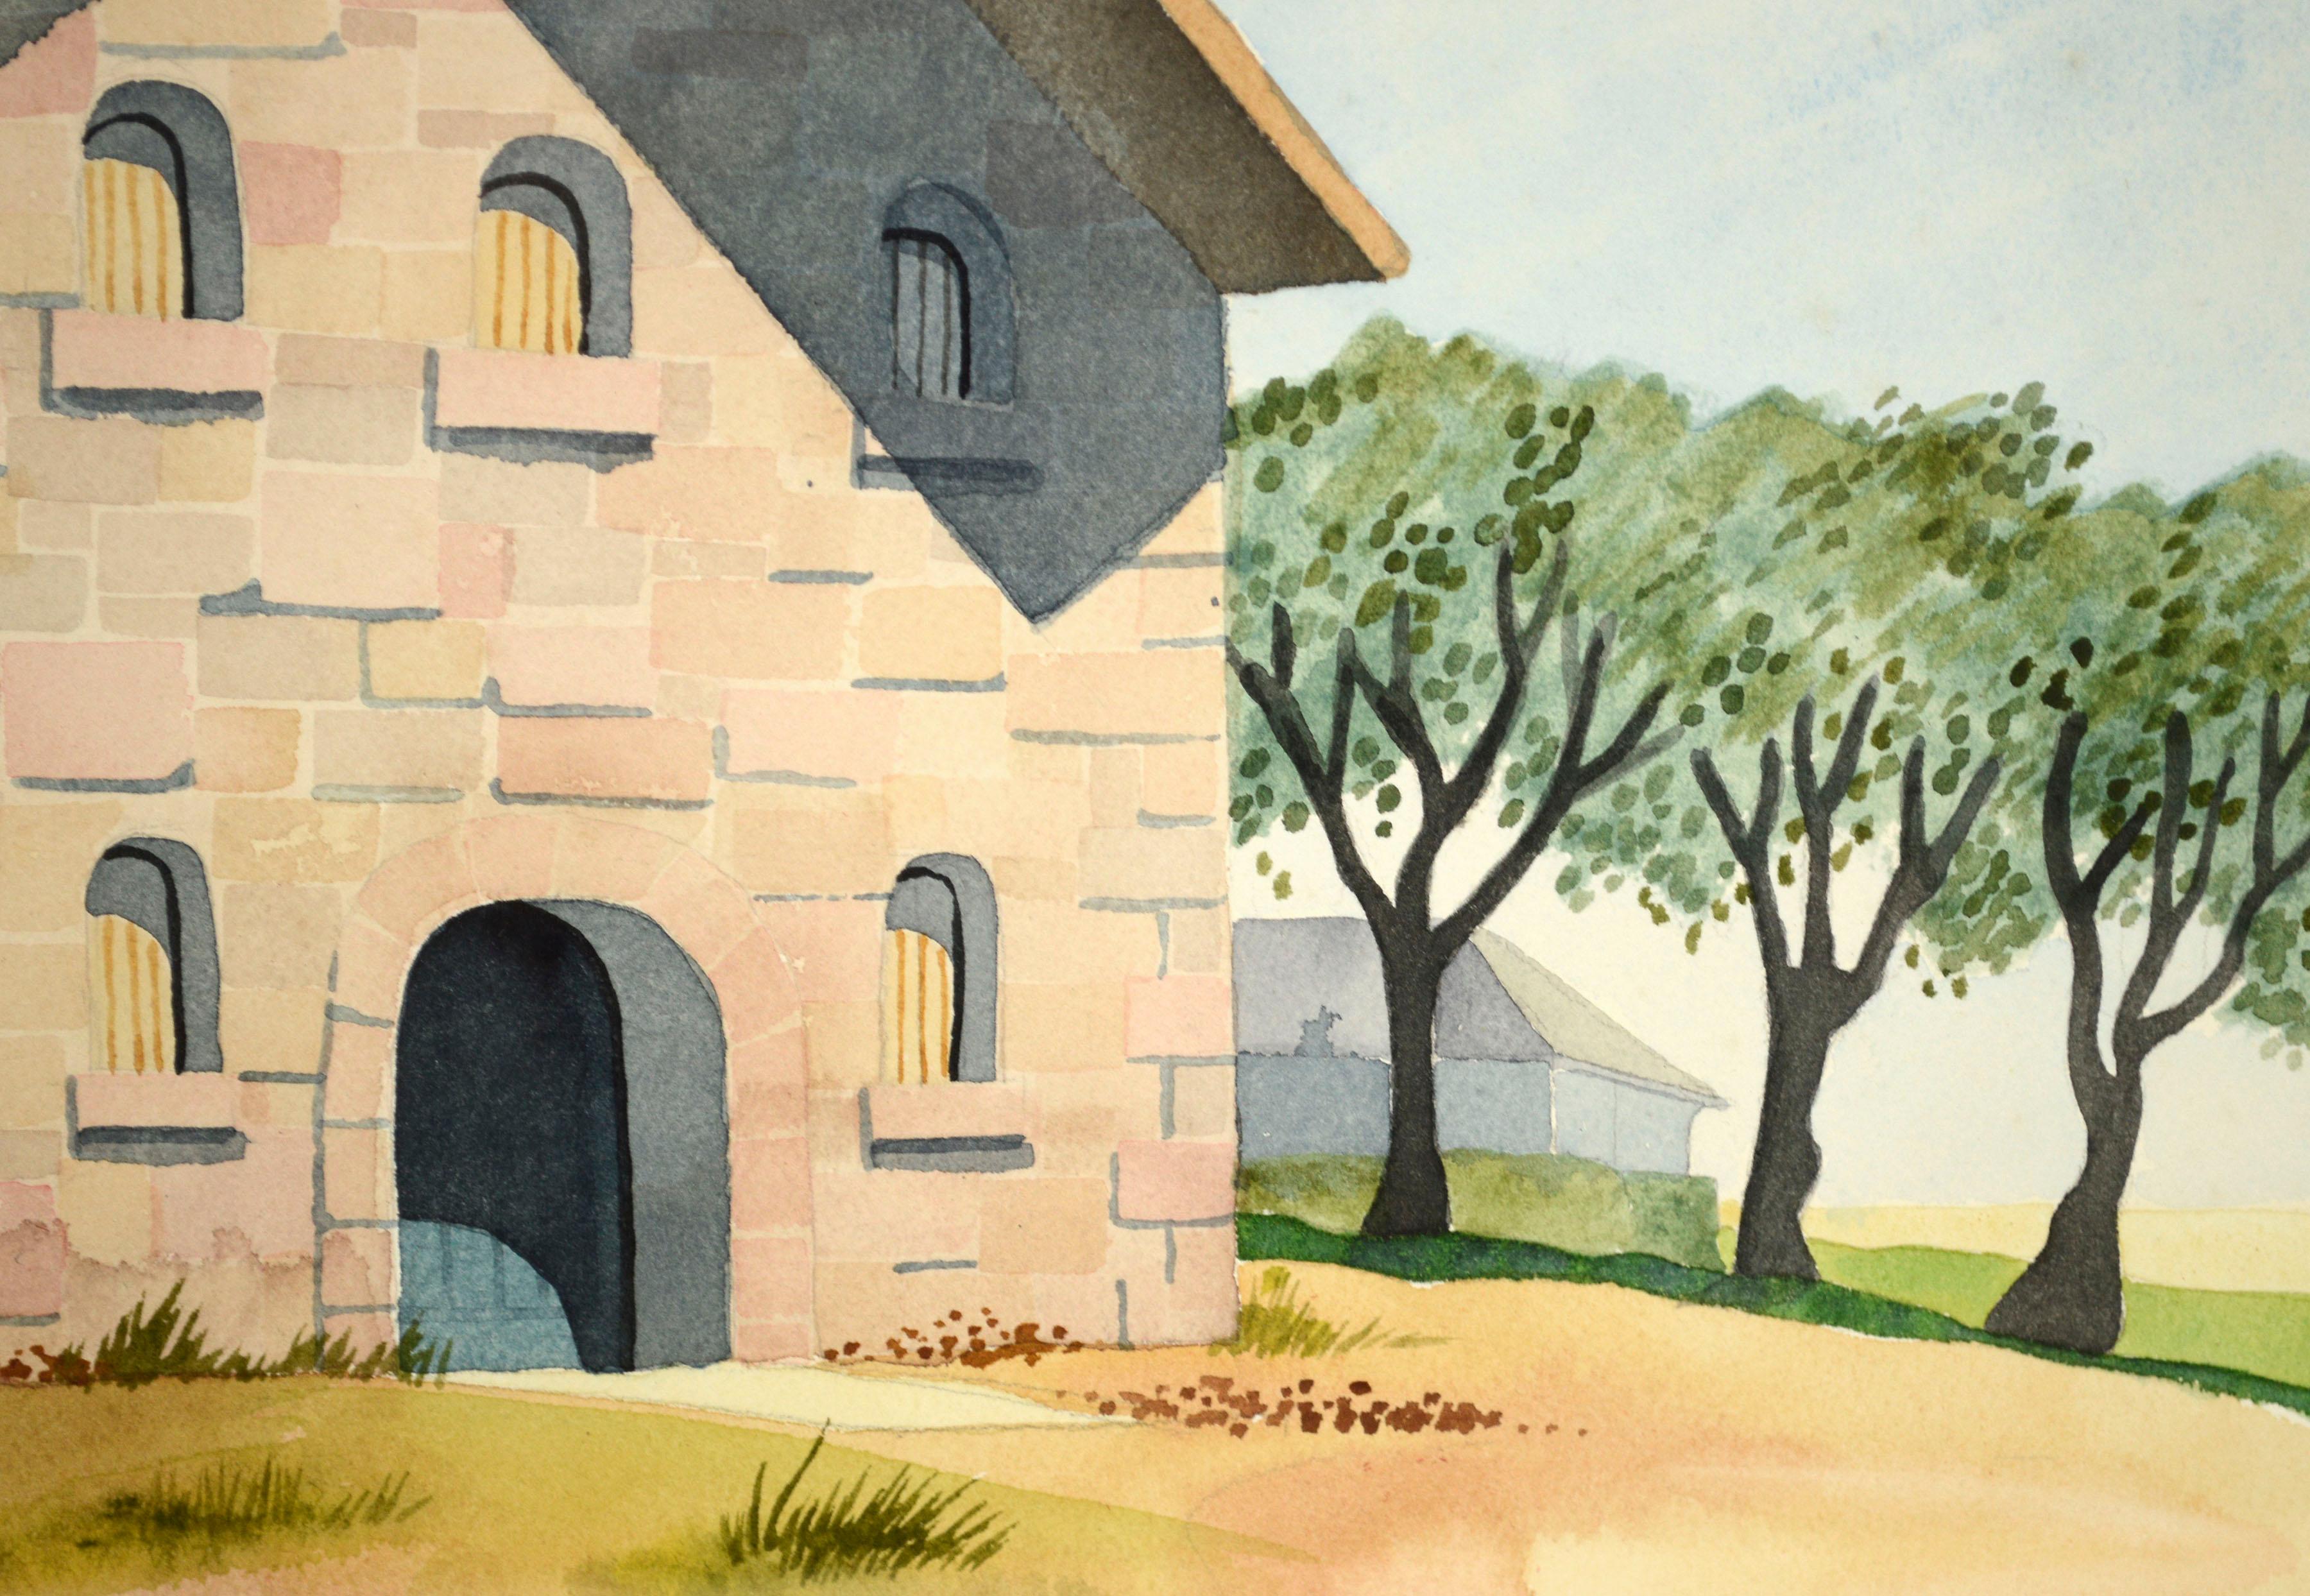 Stone Barn on the Hilltop, 1970's Landscape Watercolor - Brown Landscape Art by Gretchen Guard